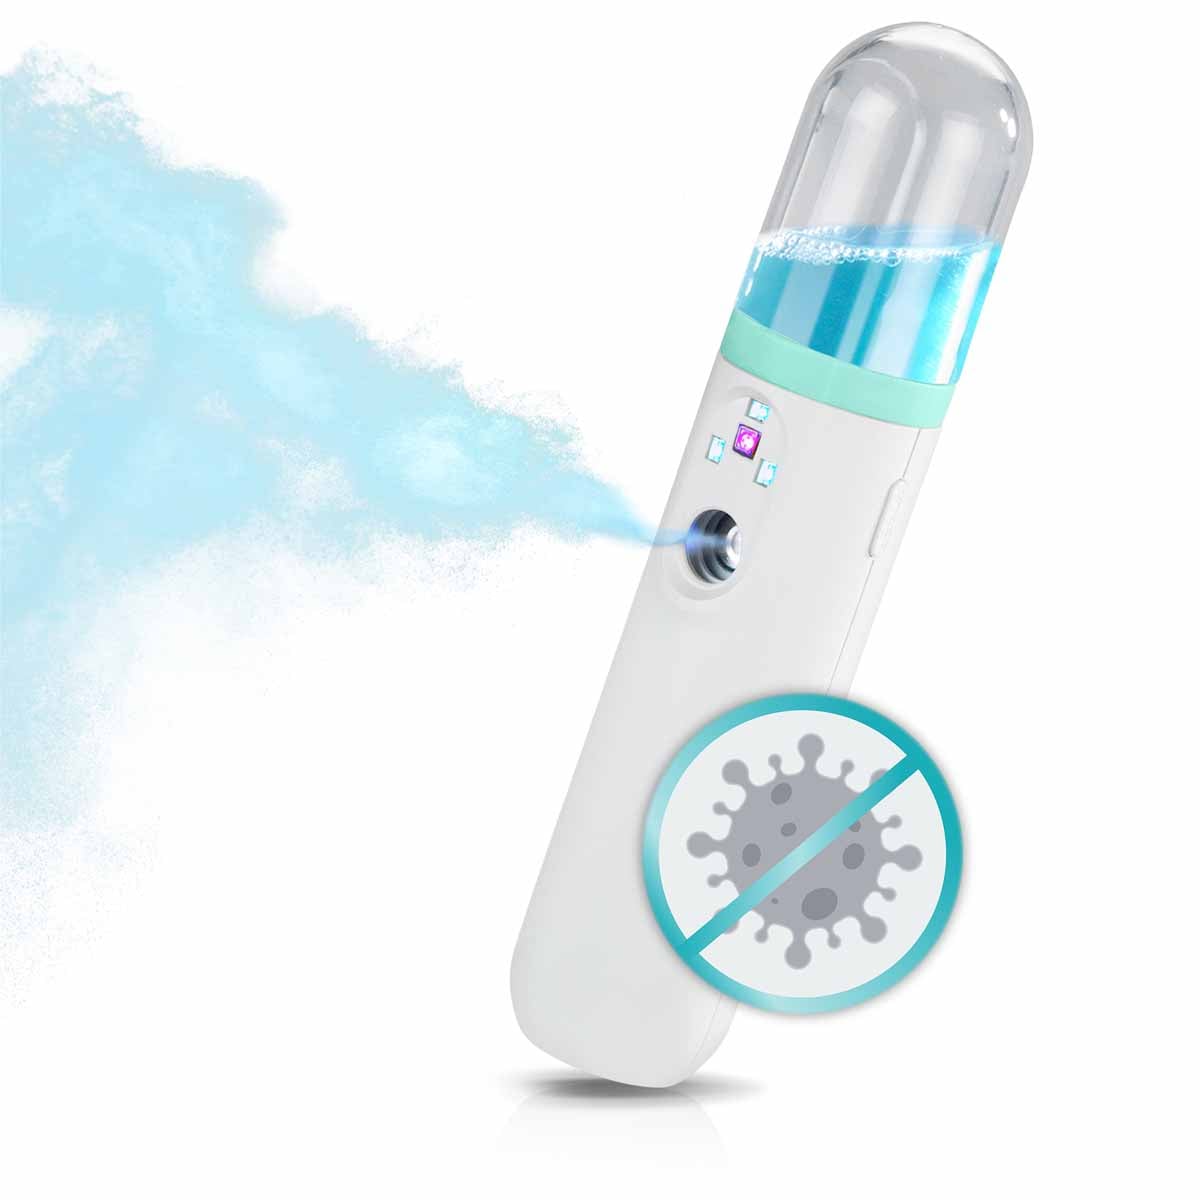 2in1 UV Desinfektionsgerät mit Sprayer